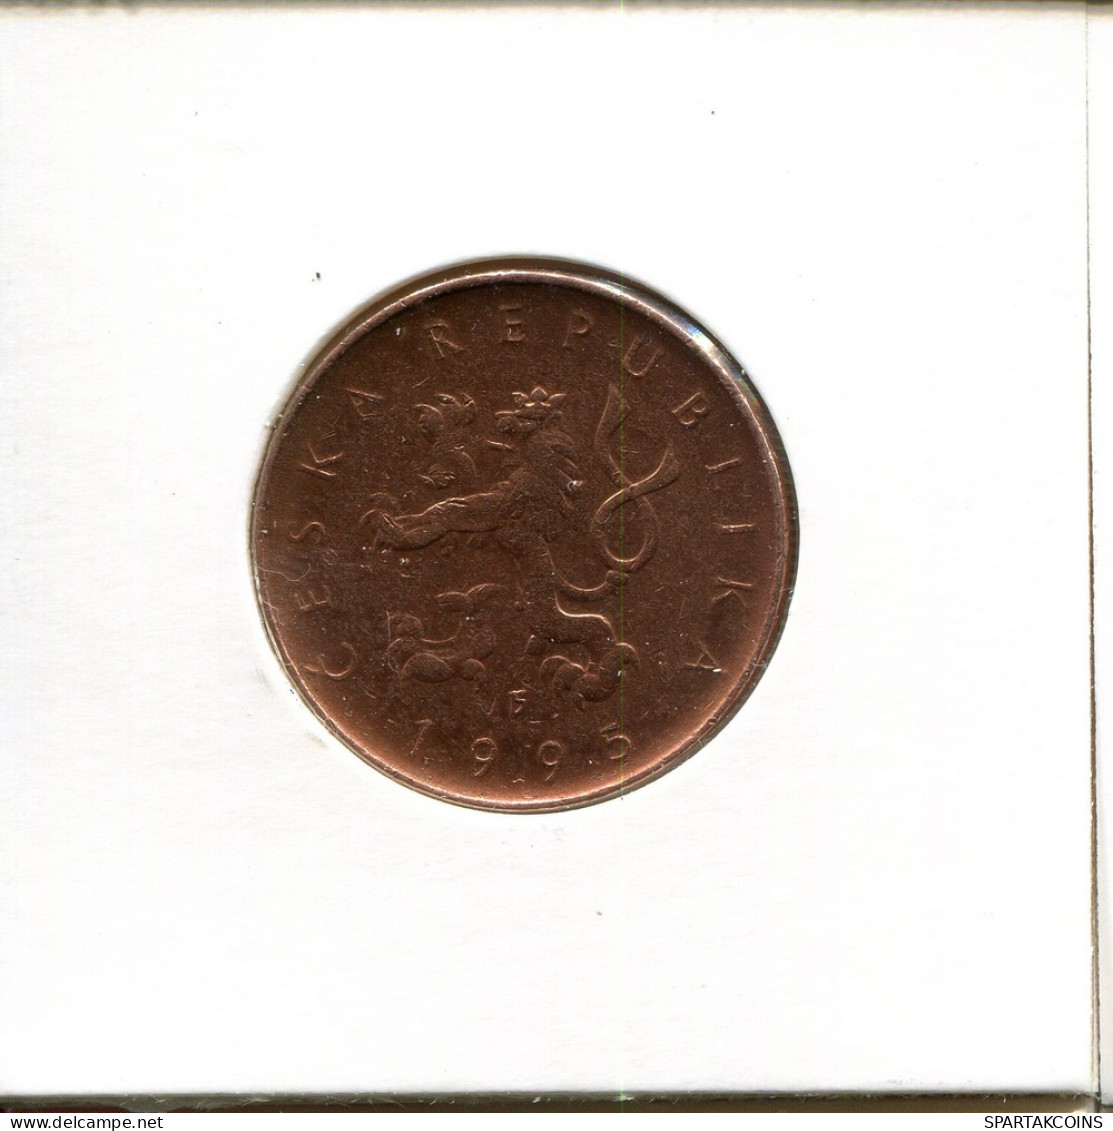 10 KORUN 1995 REPÚBLICA CHECA CZECH REPUBLIC Moneda #AP776.2.E.A - Czech Republic